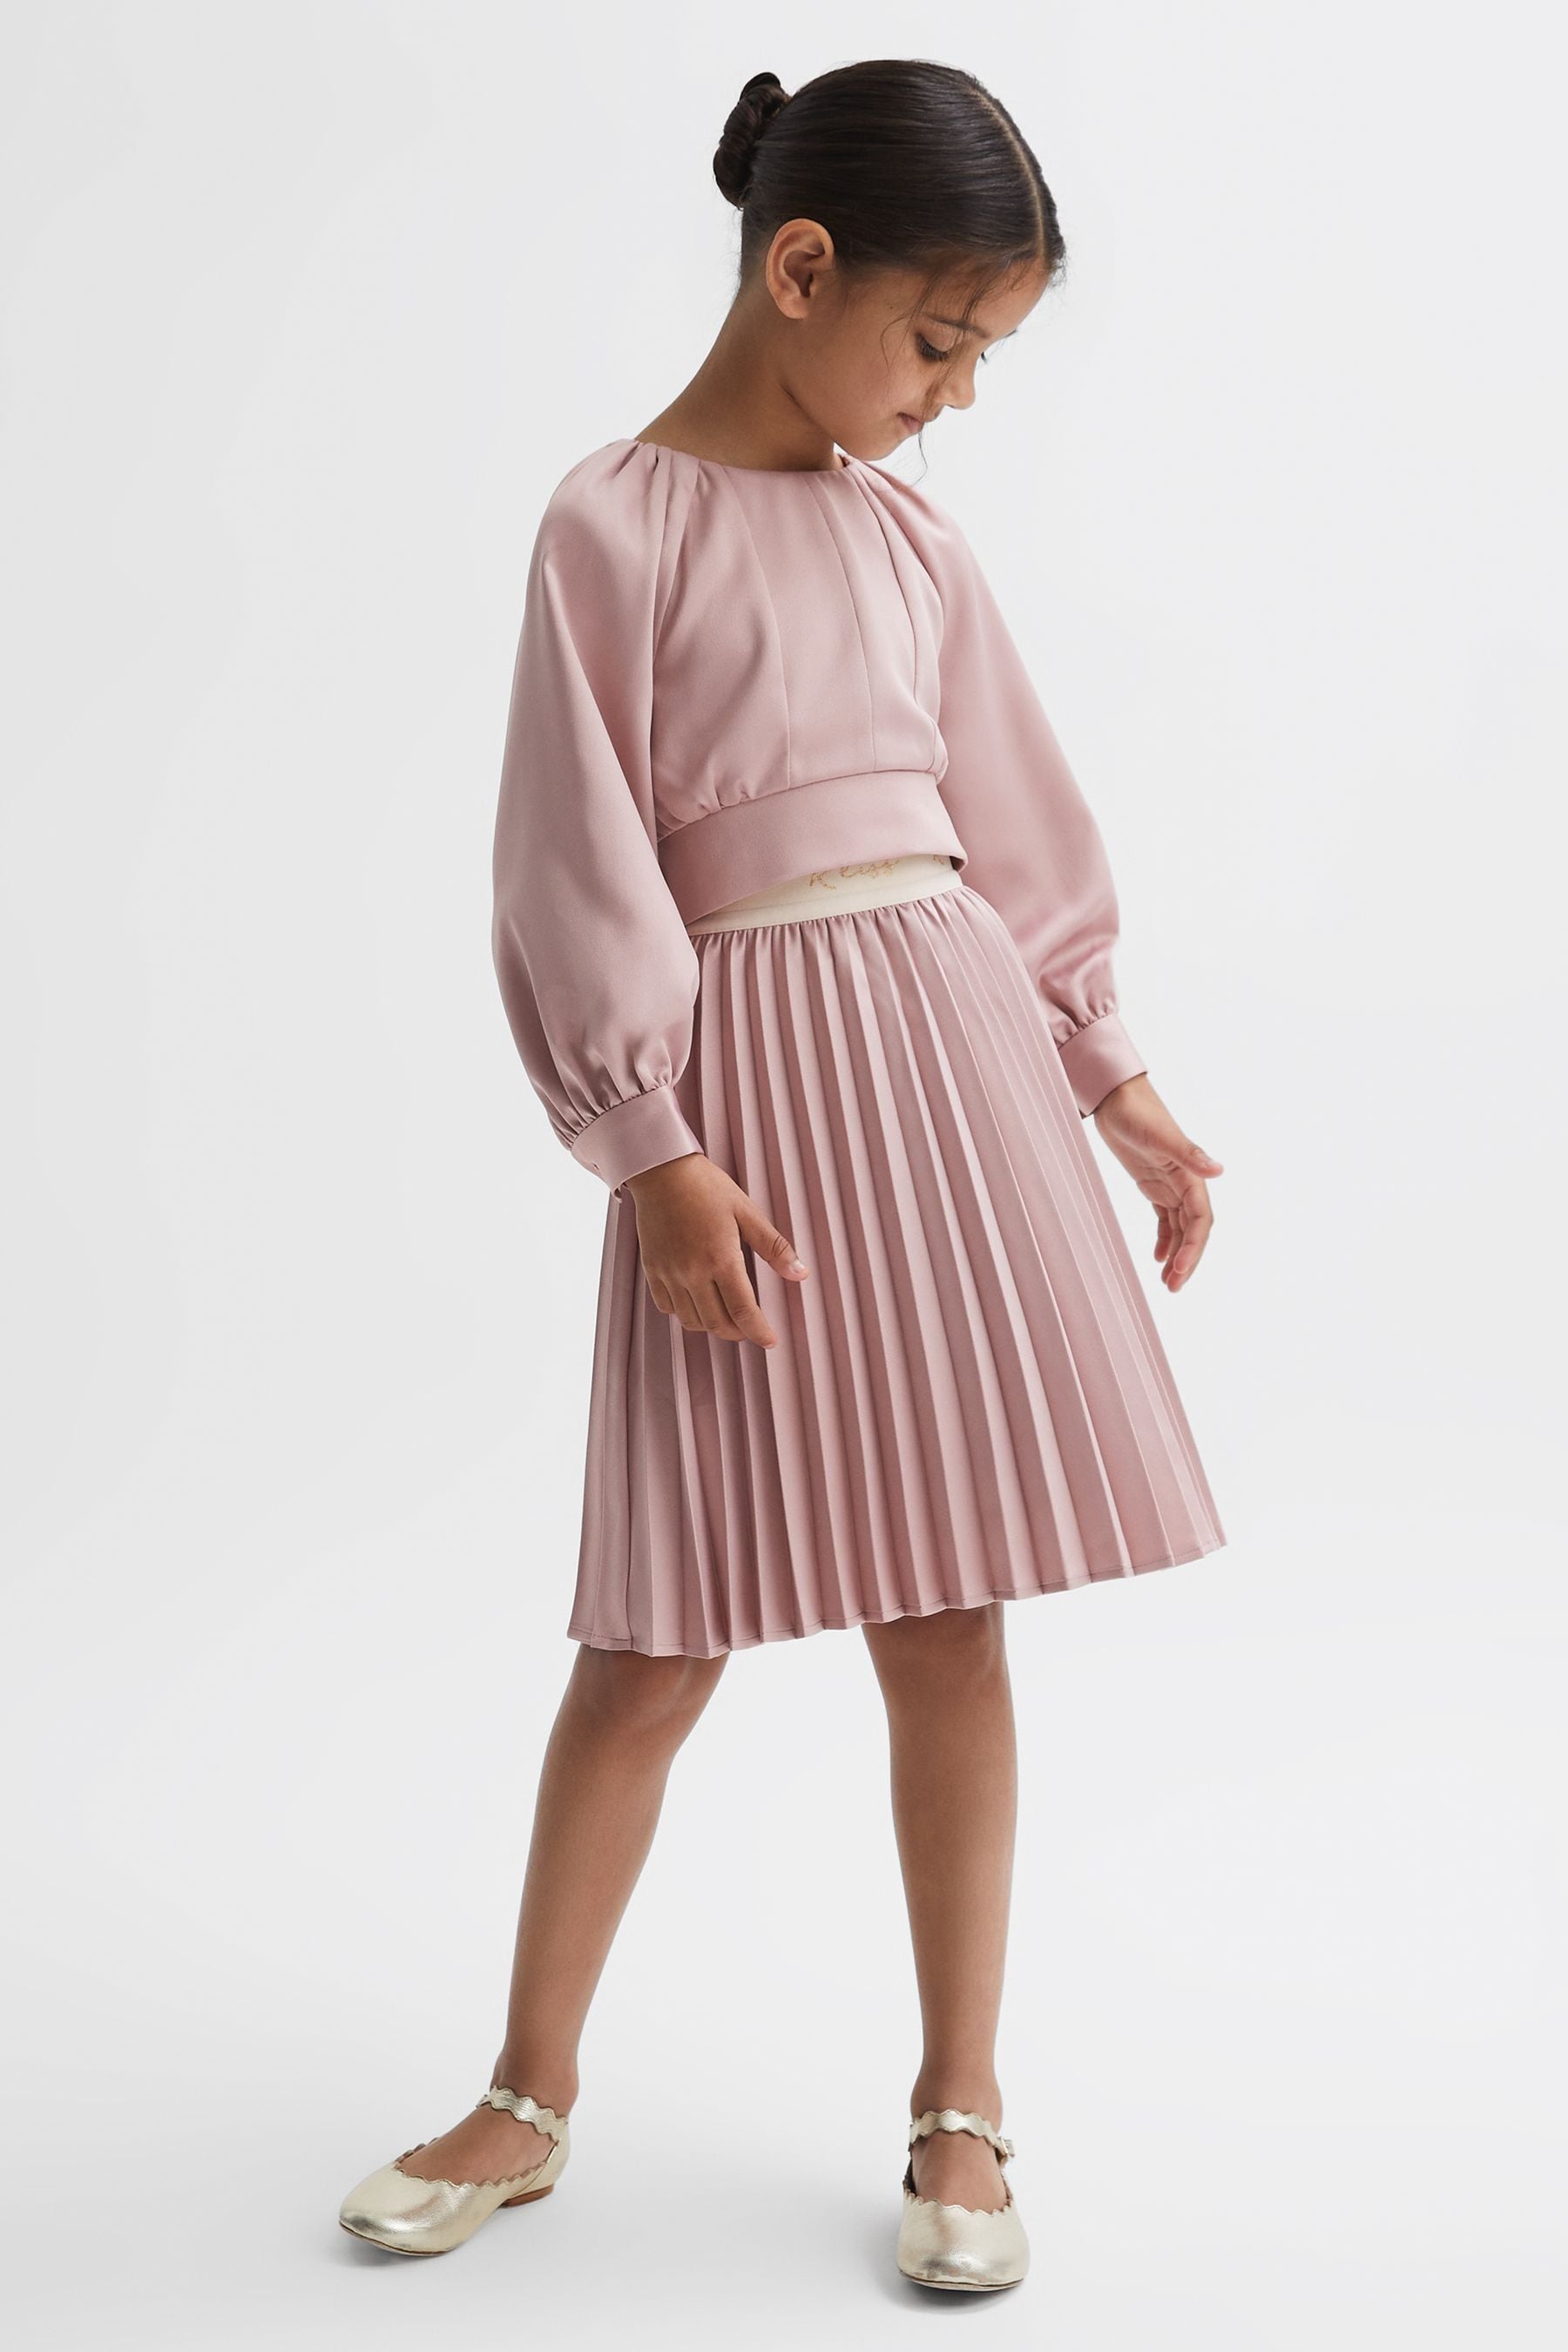 Reiss Ezra - Pink Senior Pleated Elasticated Skirt, Uk 9-10 Yrs